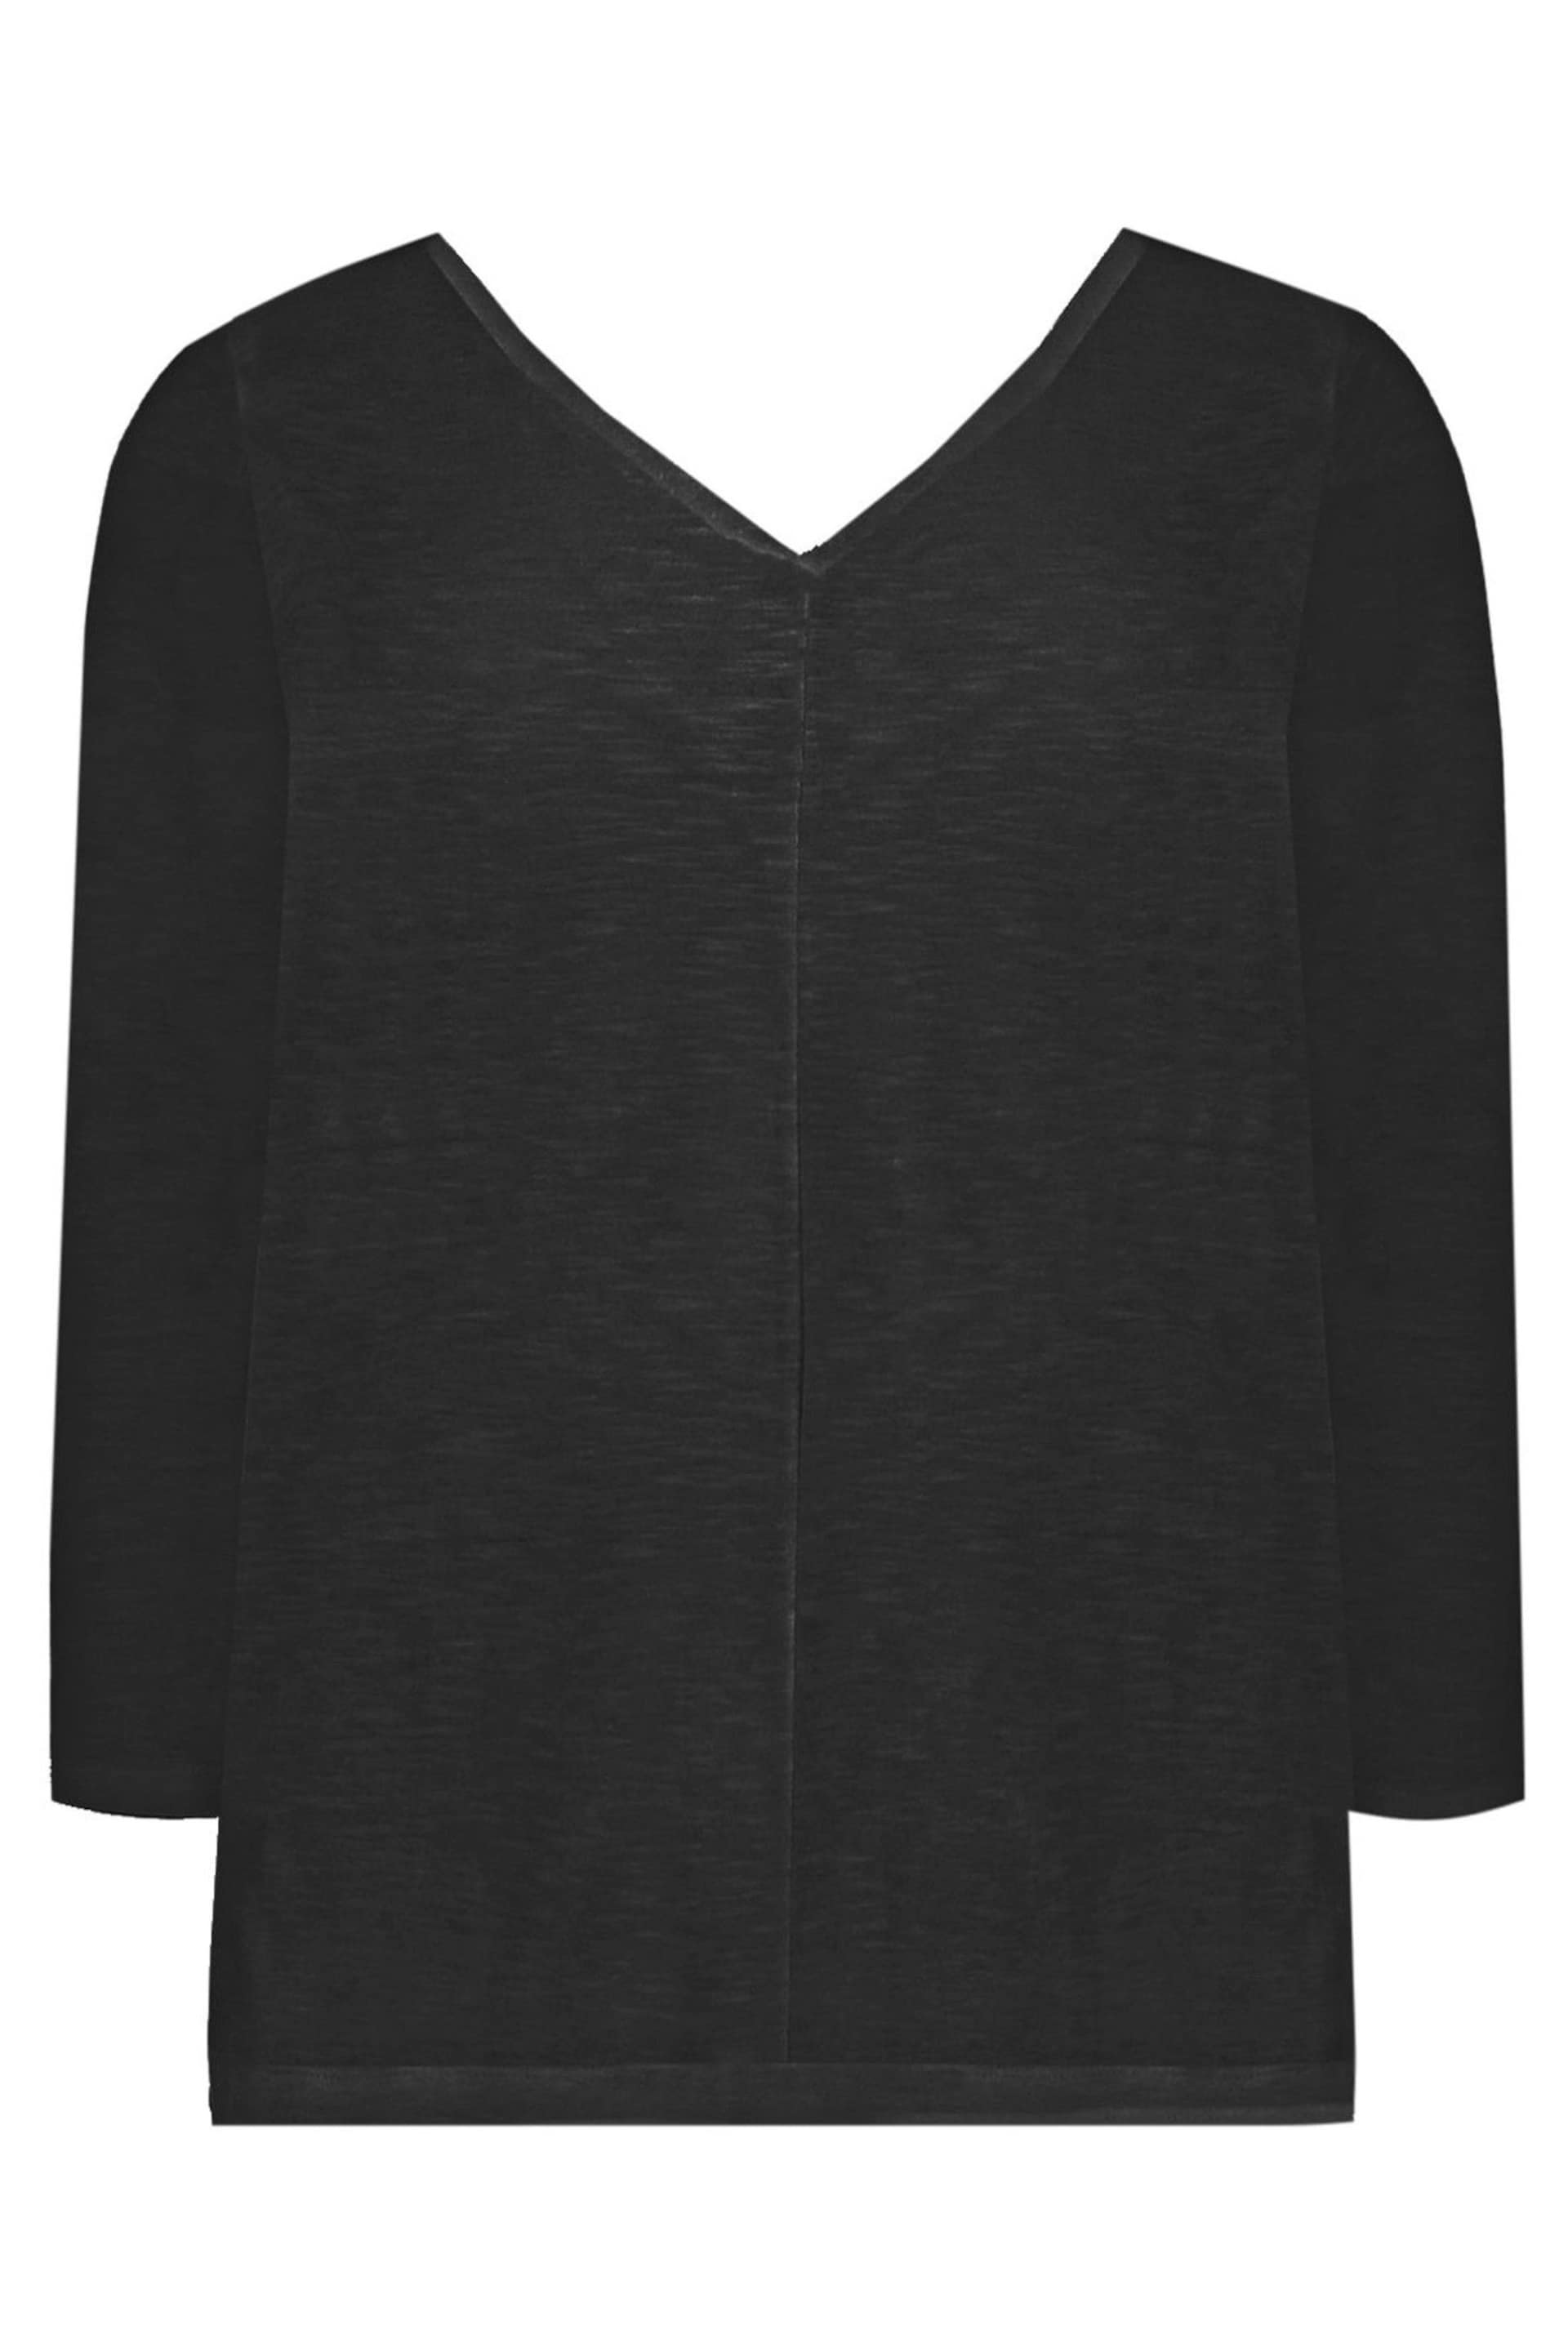 Live Unlimited Cotton Slub V-Neck Long Sleeve T-Shirt - Image 4 of 4